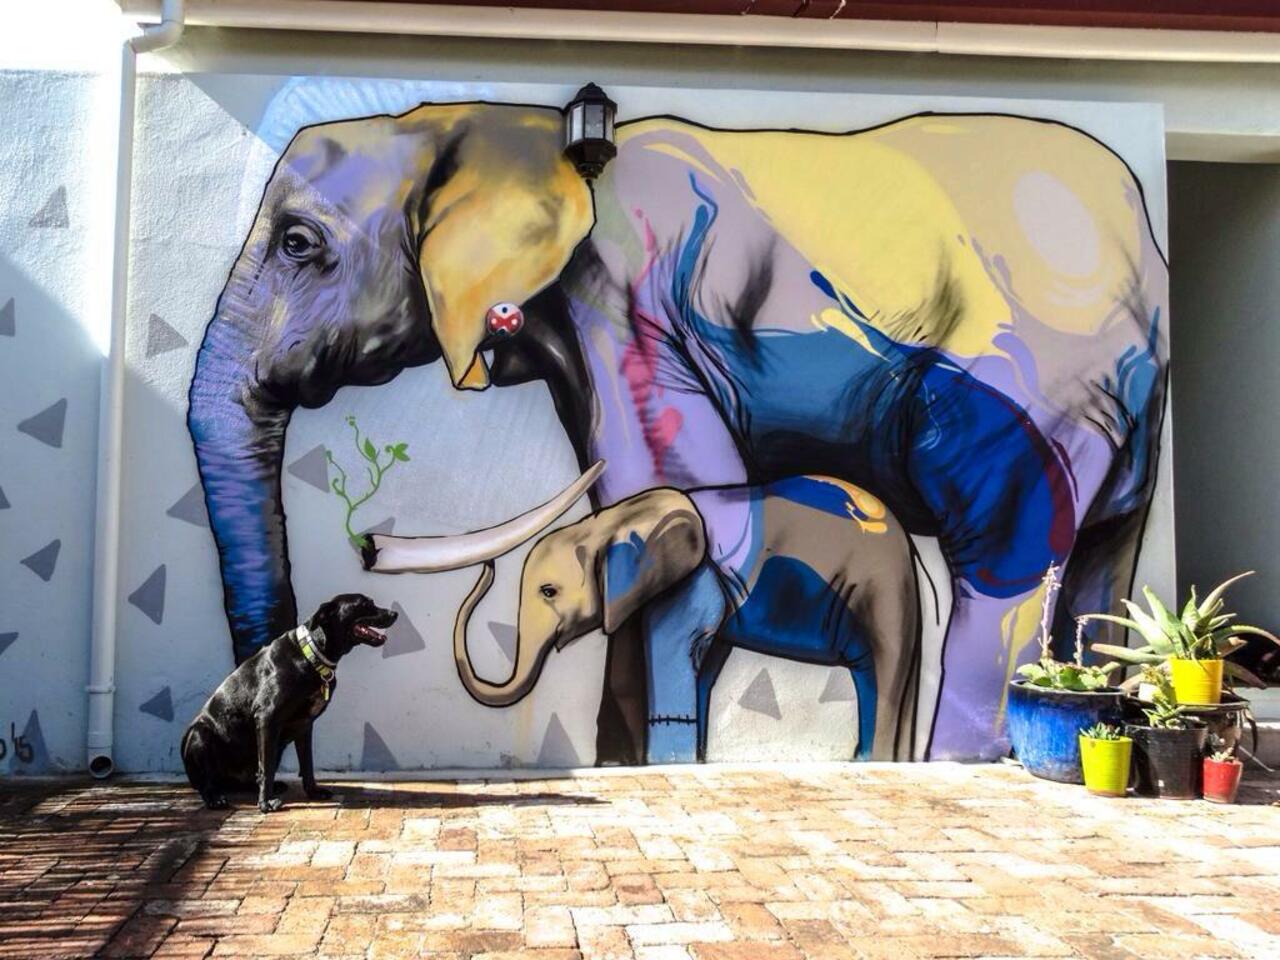 Latest nature in Street Art piece by Falko Paints In Cape Town

#art #mural #graffiti #streetart http://t.co/BP7Sfa9t2D